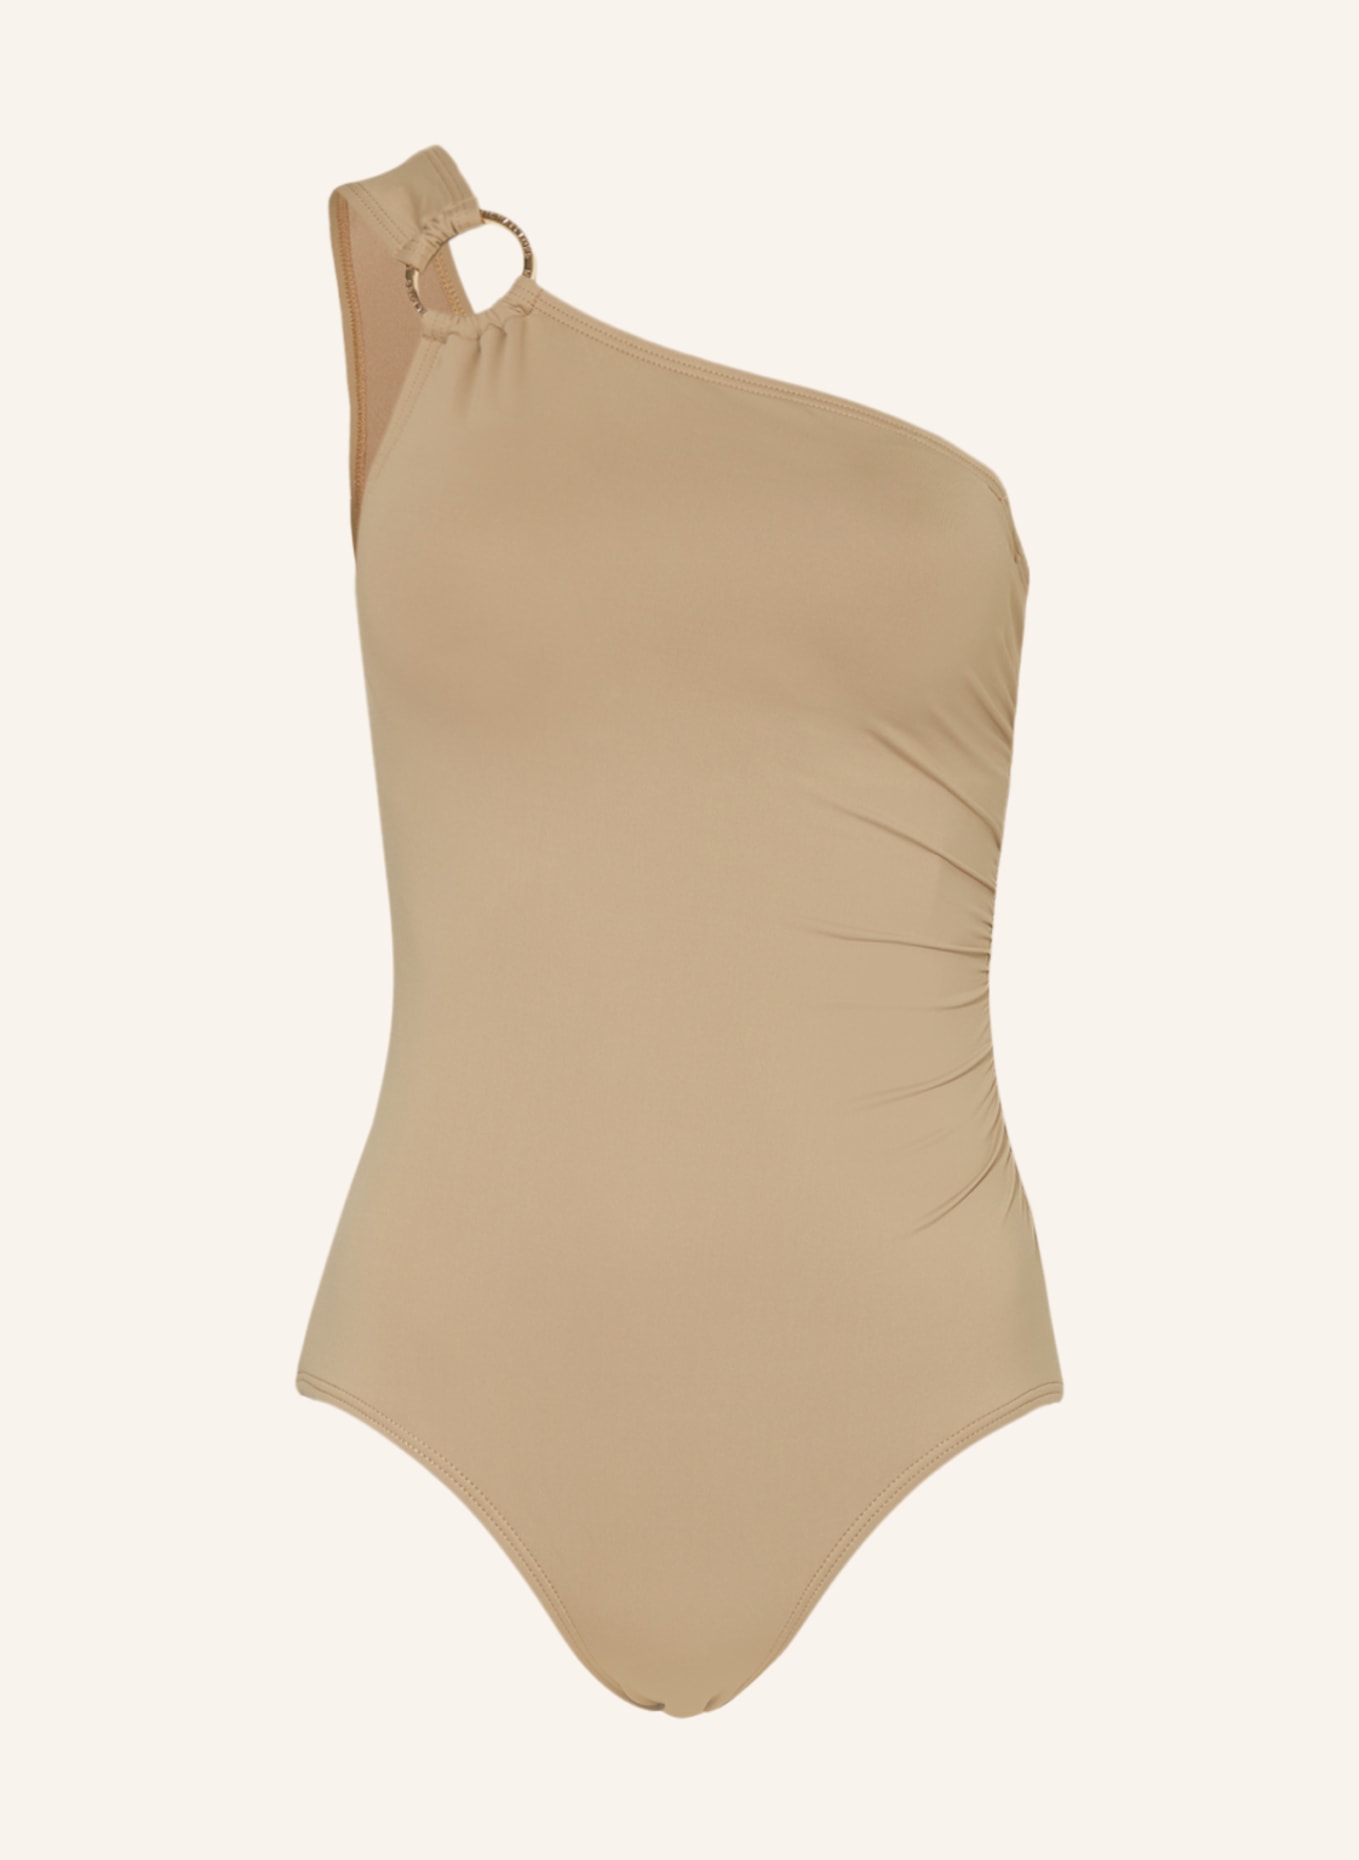 MICHAEL KORS One-Shoulder-Badeanzug ICONIC SOLIDS, Farbe: BEIGE (Bild 1)